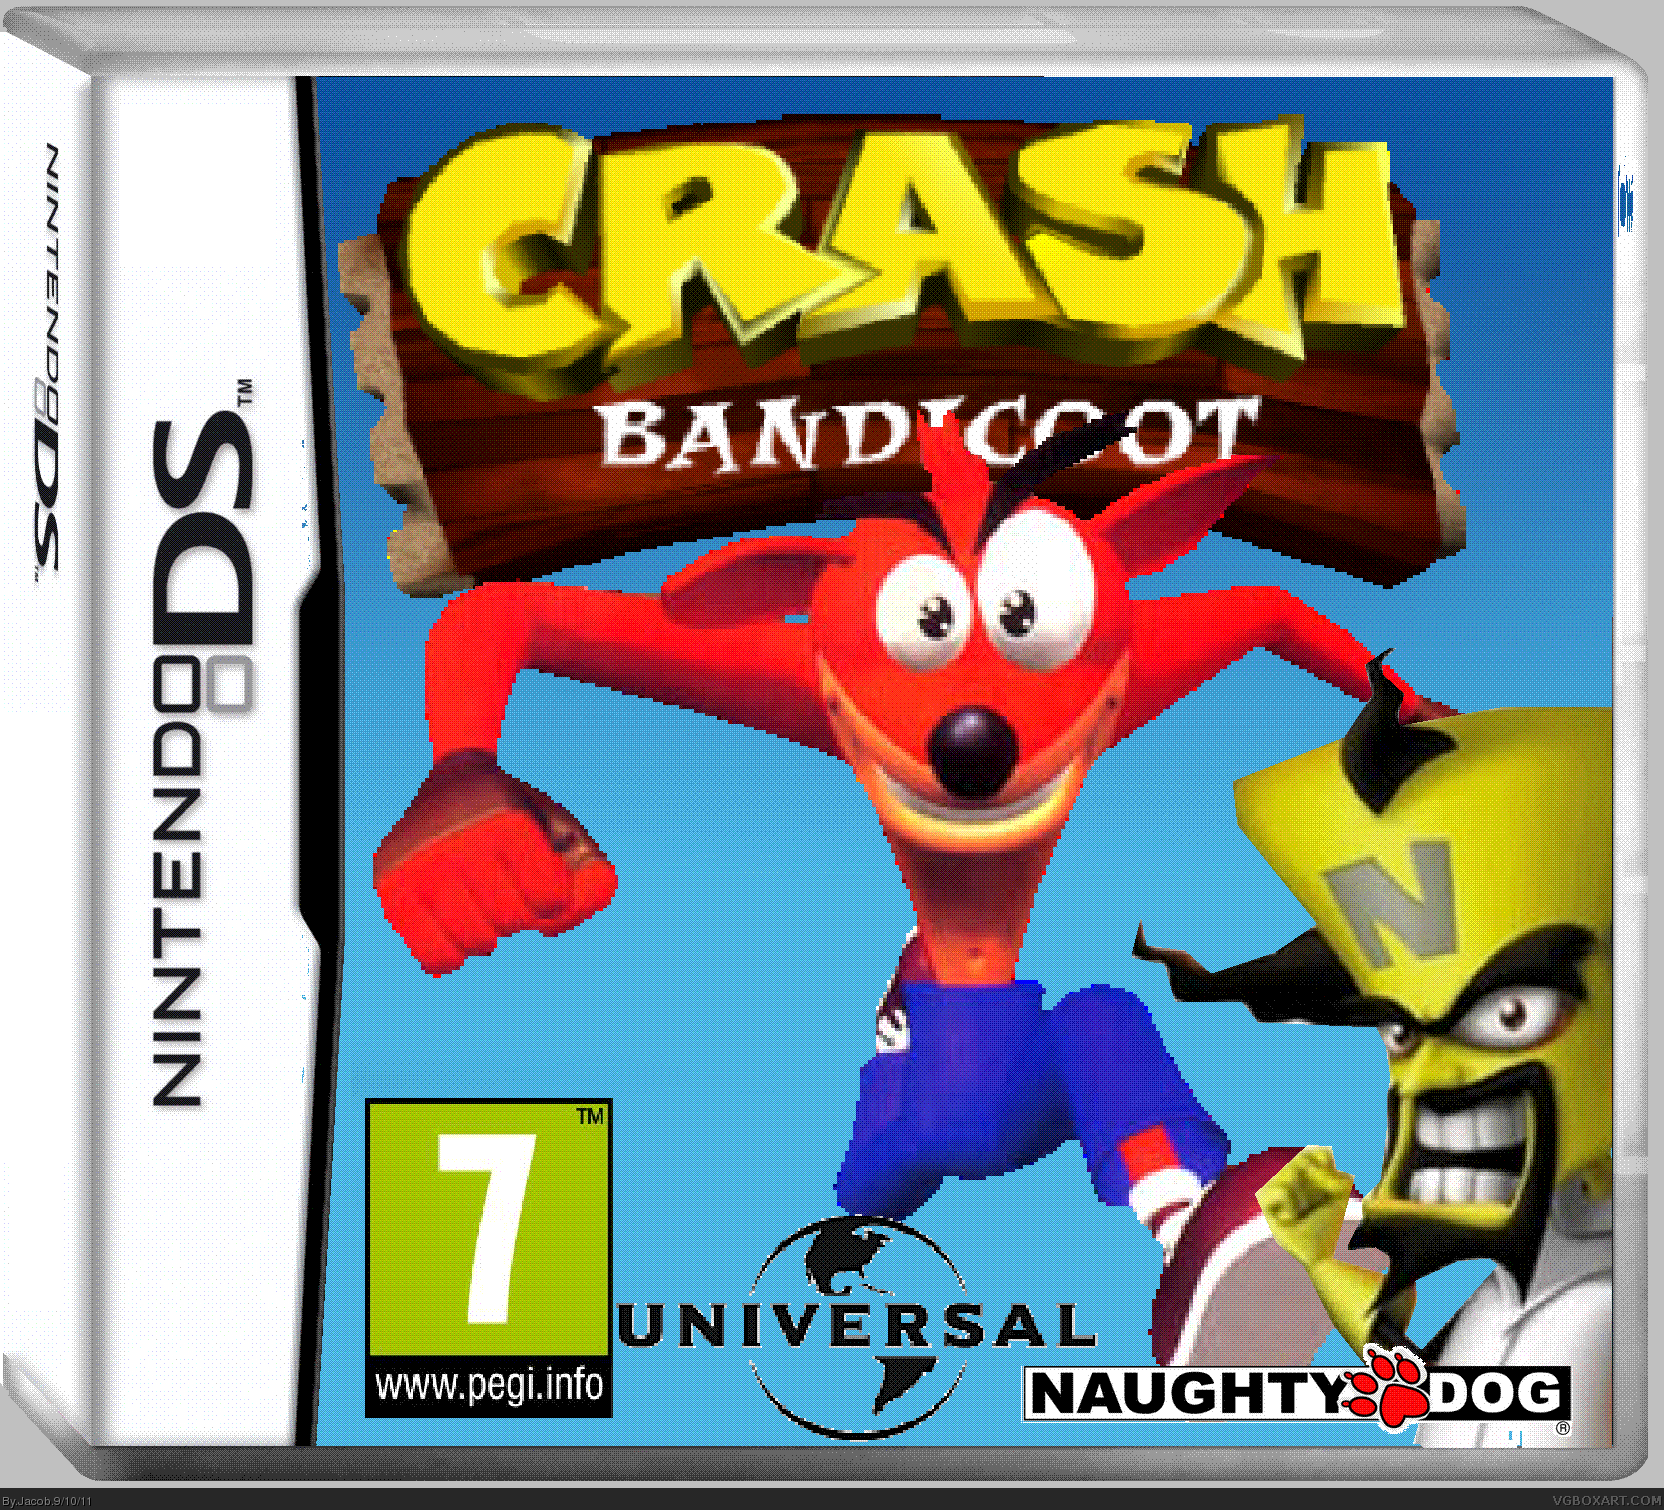 Crash Bandicoot 15th Anniversary box cover